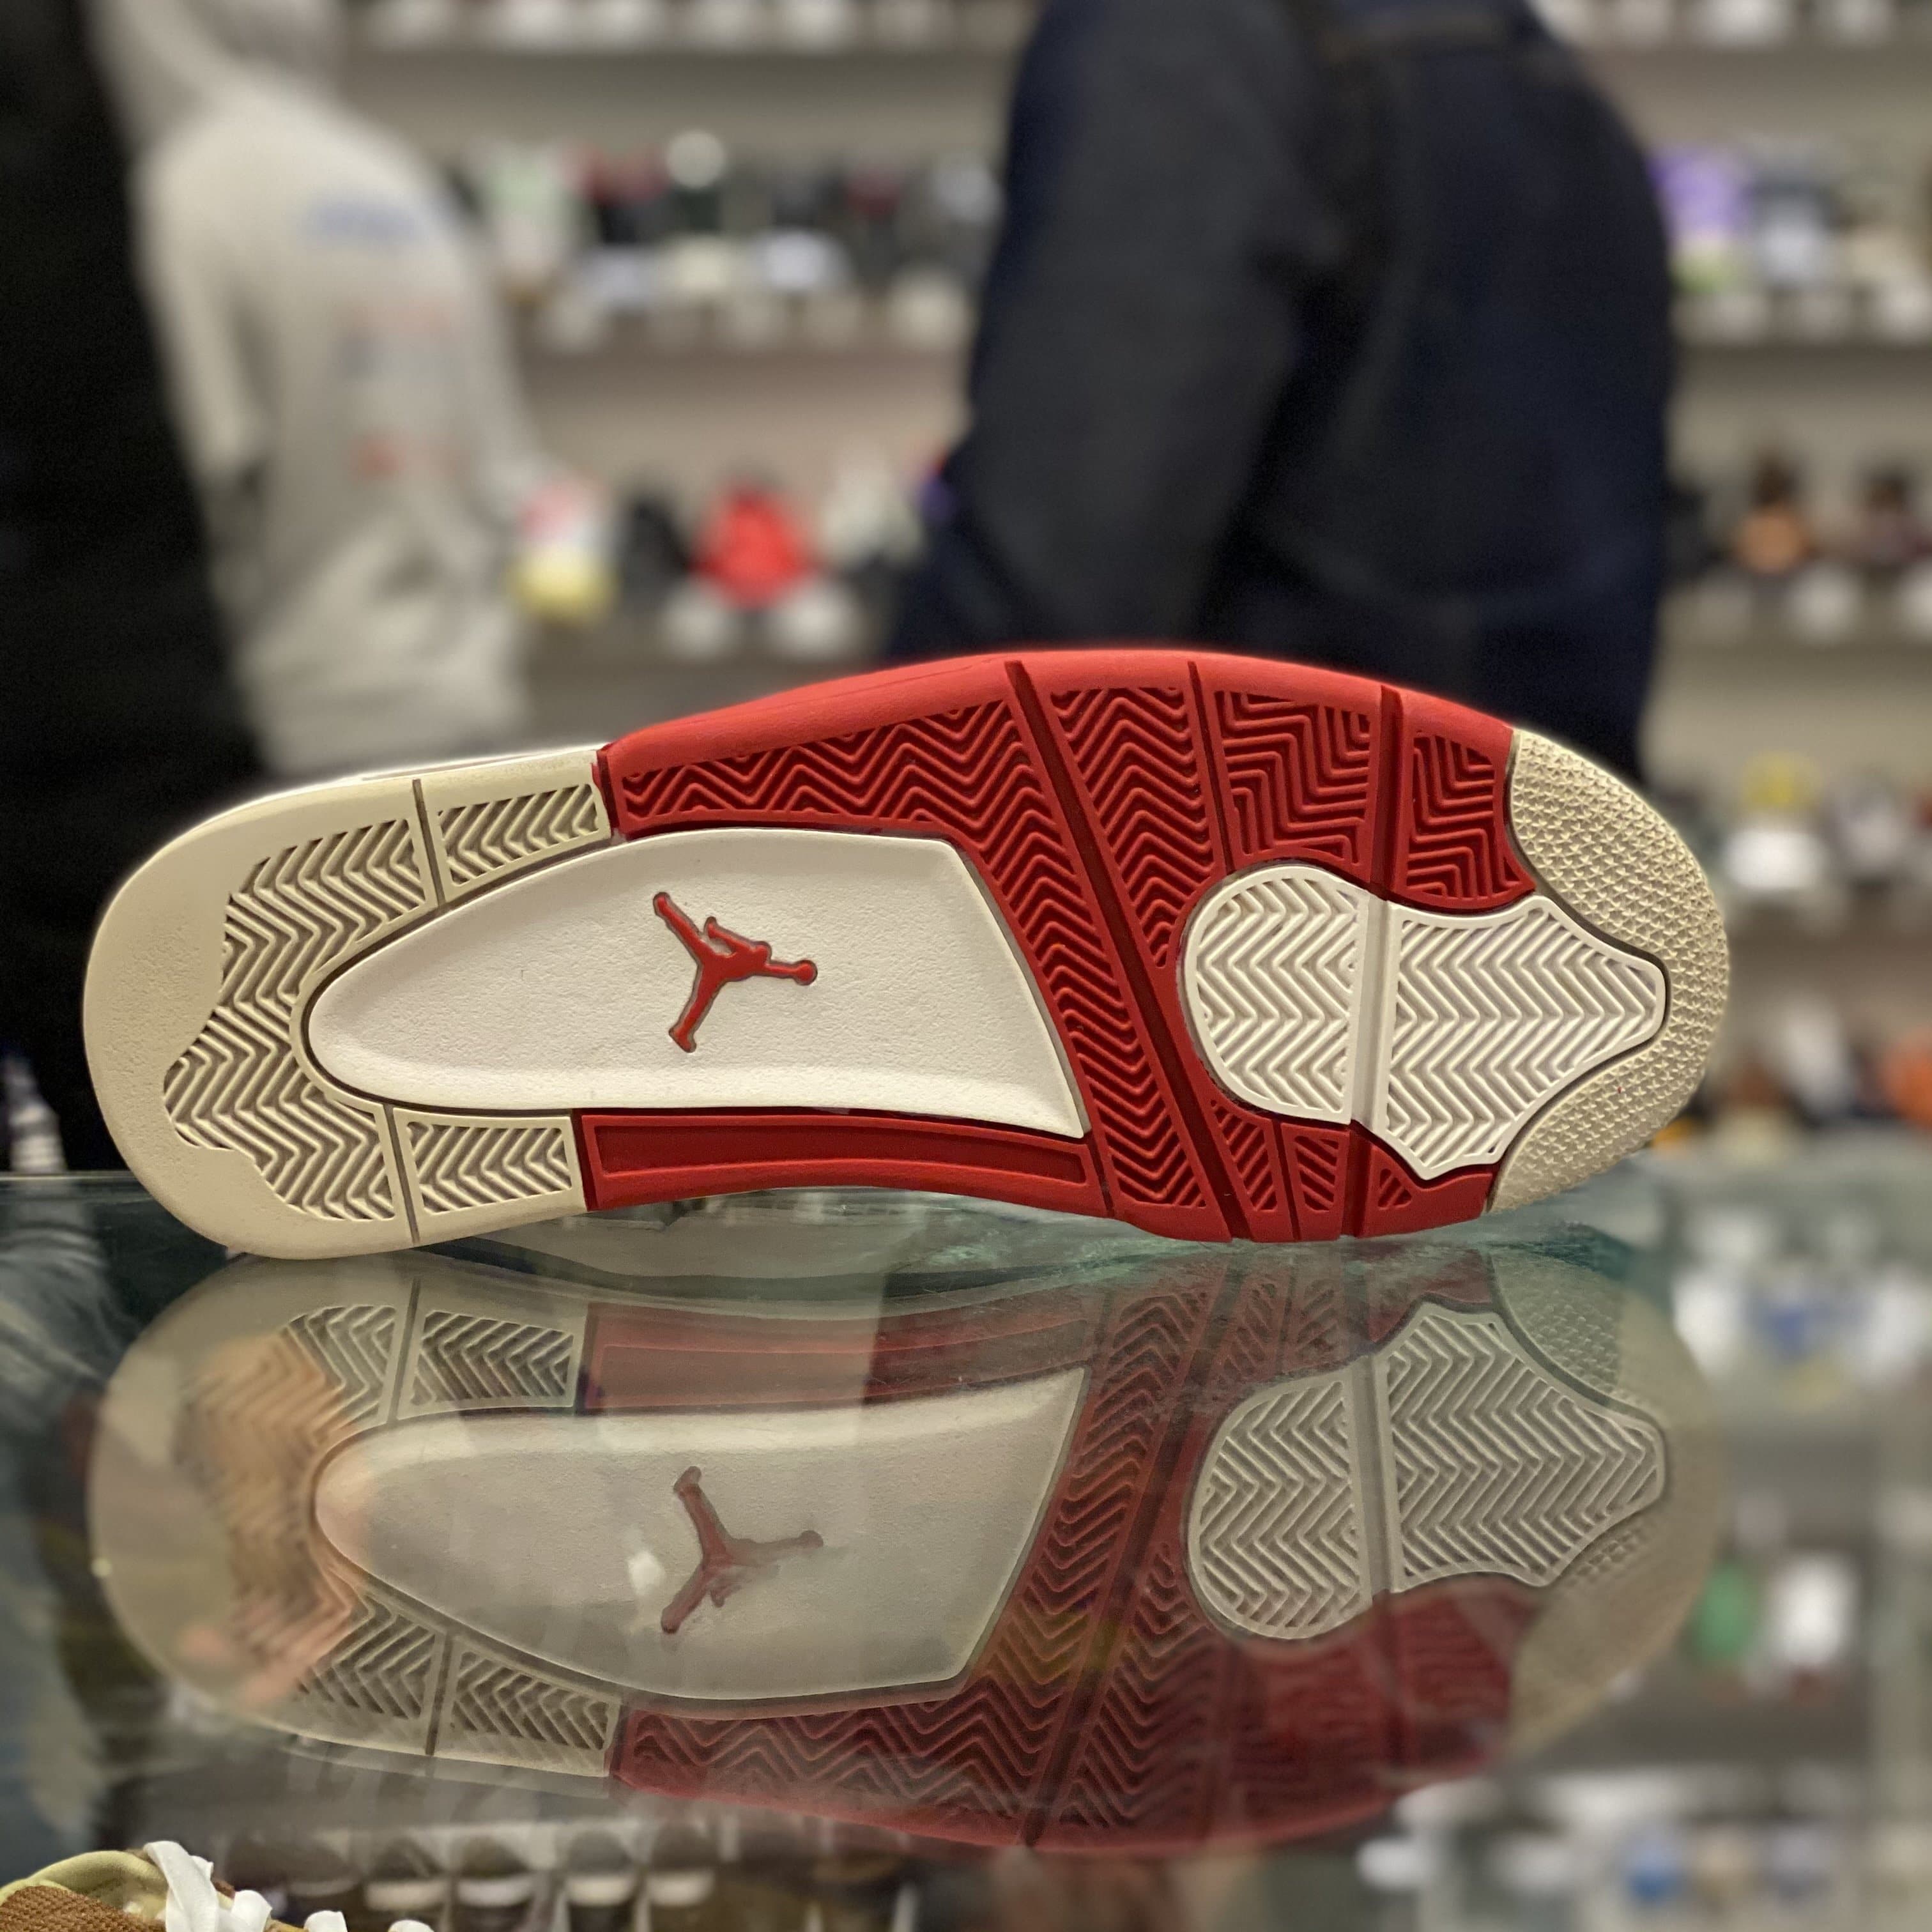 Air Jordan 4 Retro “Fire Red”